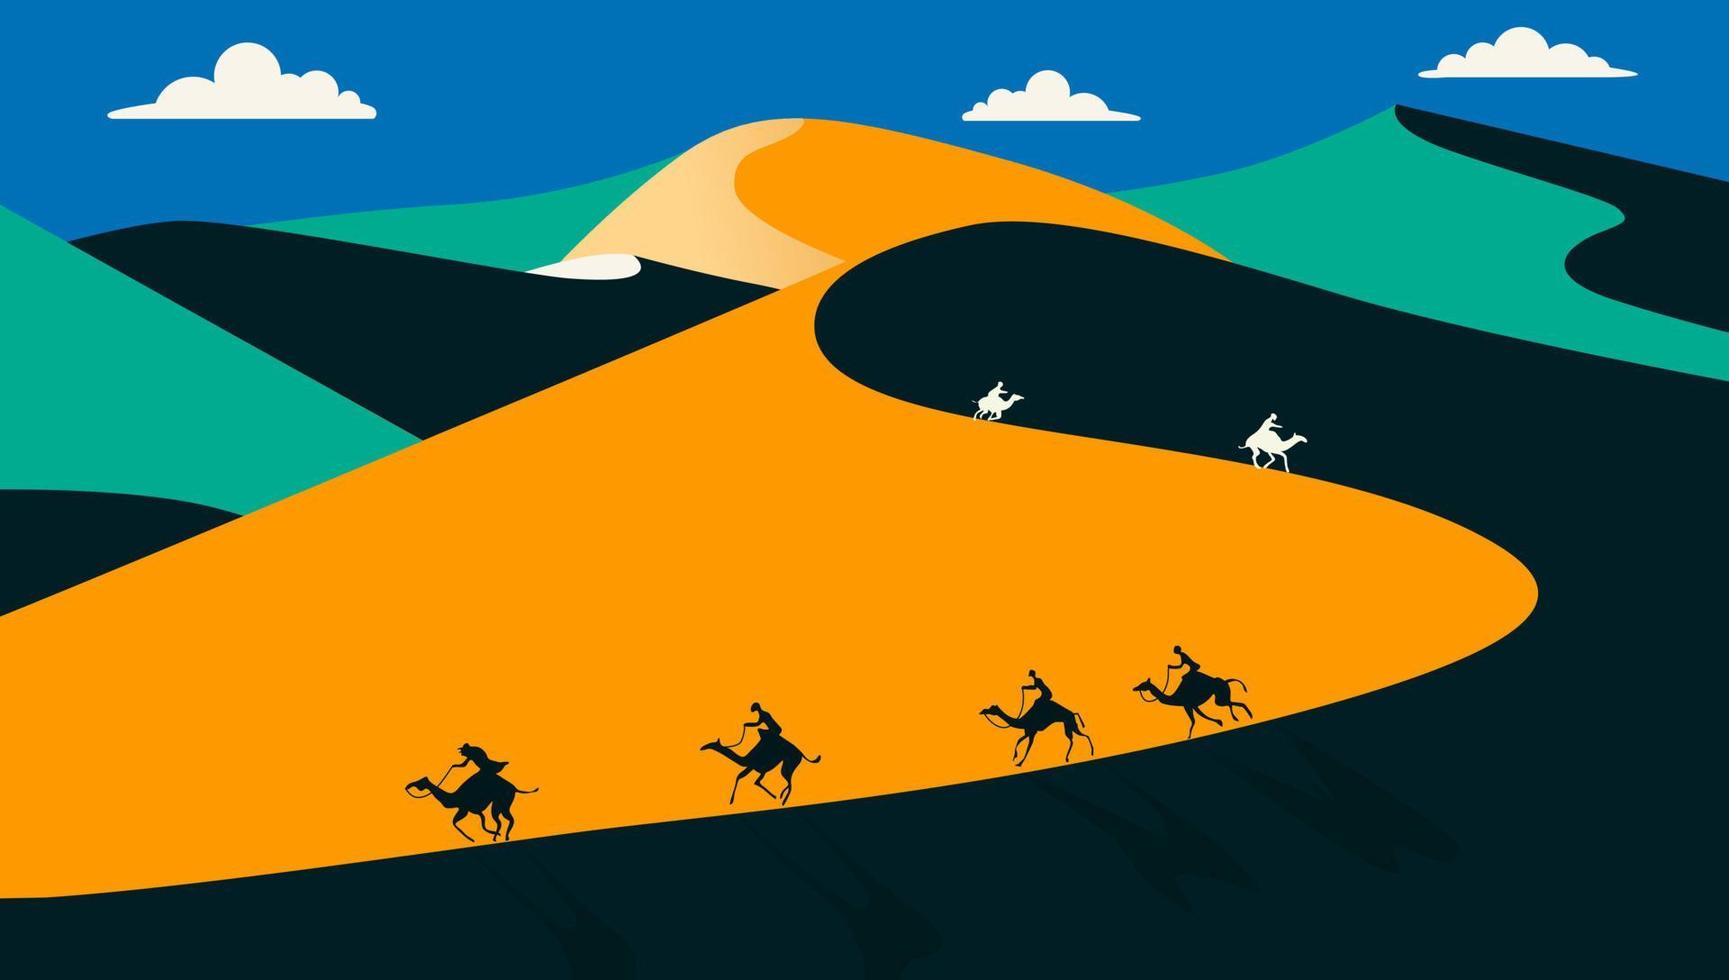 platt landskap design vektorillustration med öken, husvagn av kameler. vektor illustration.